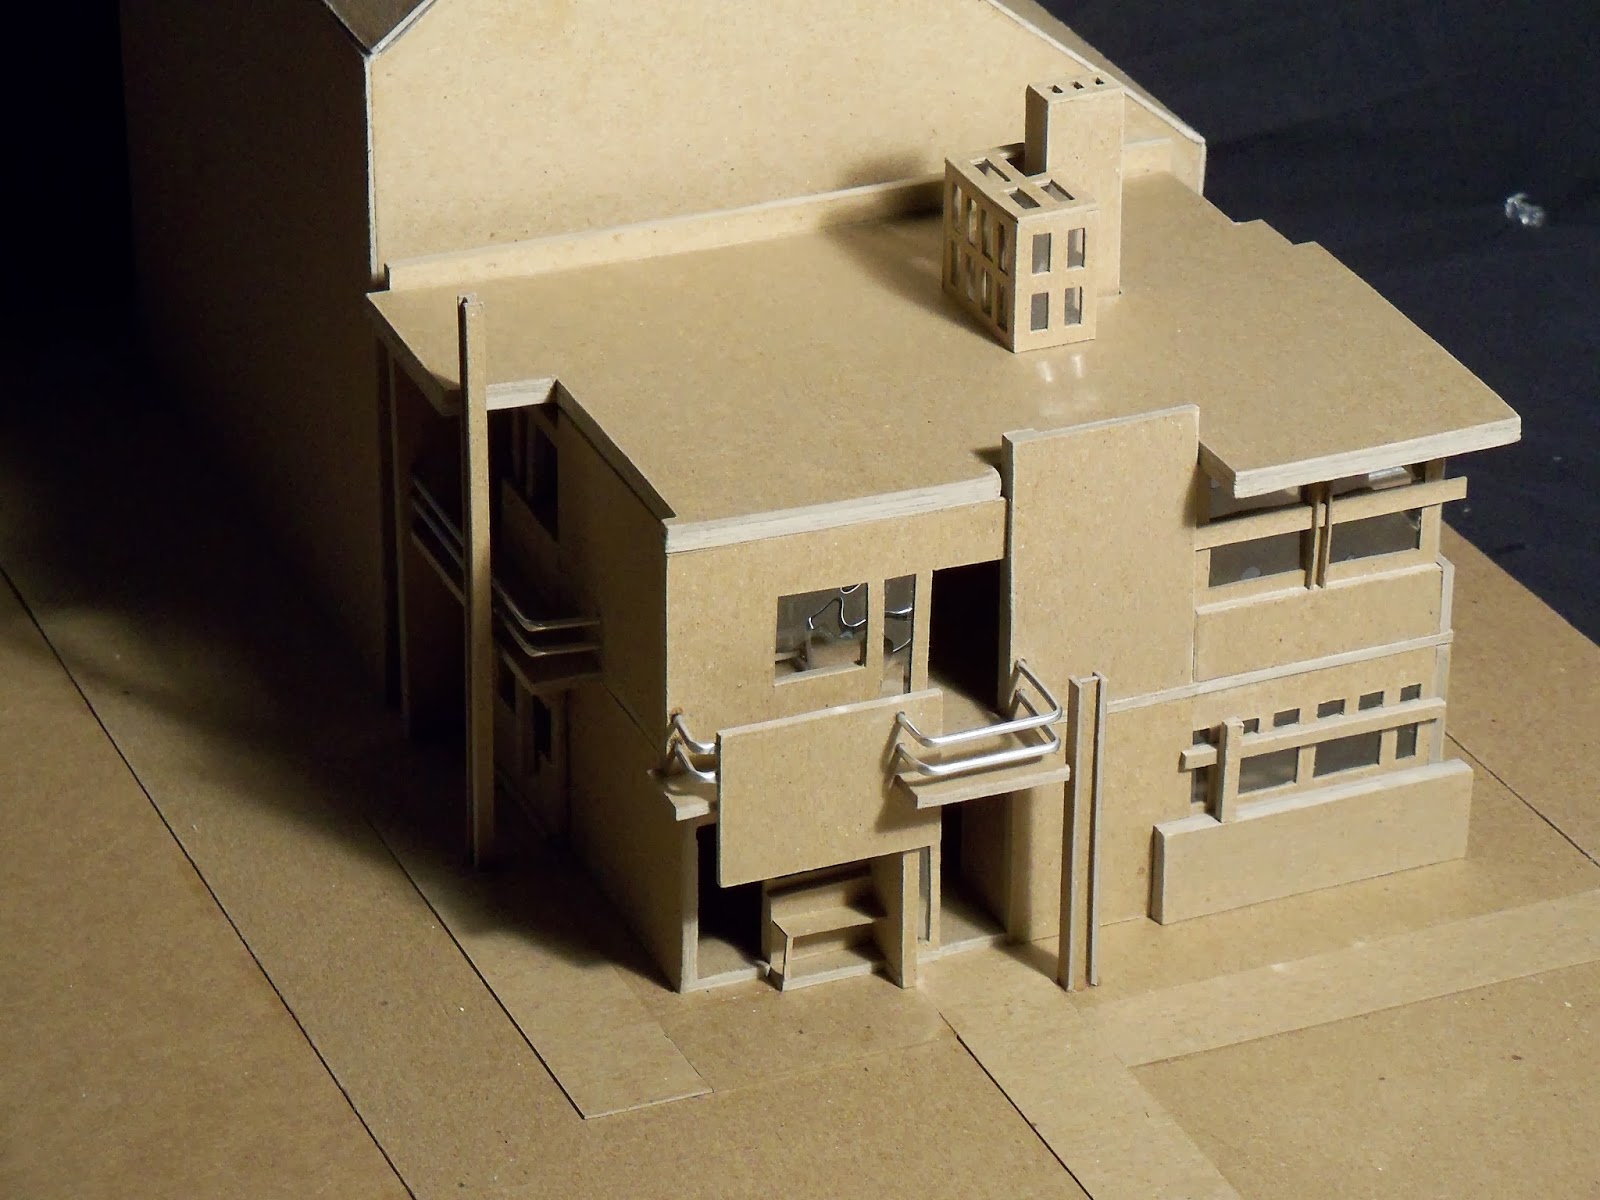 Edward Bauknight Designs Model of the Rietveld Schroder House